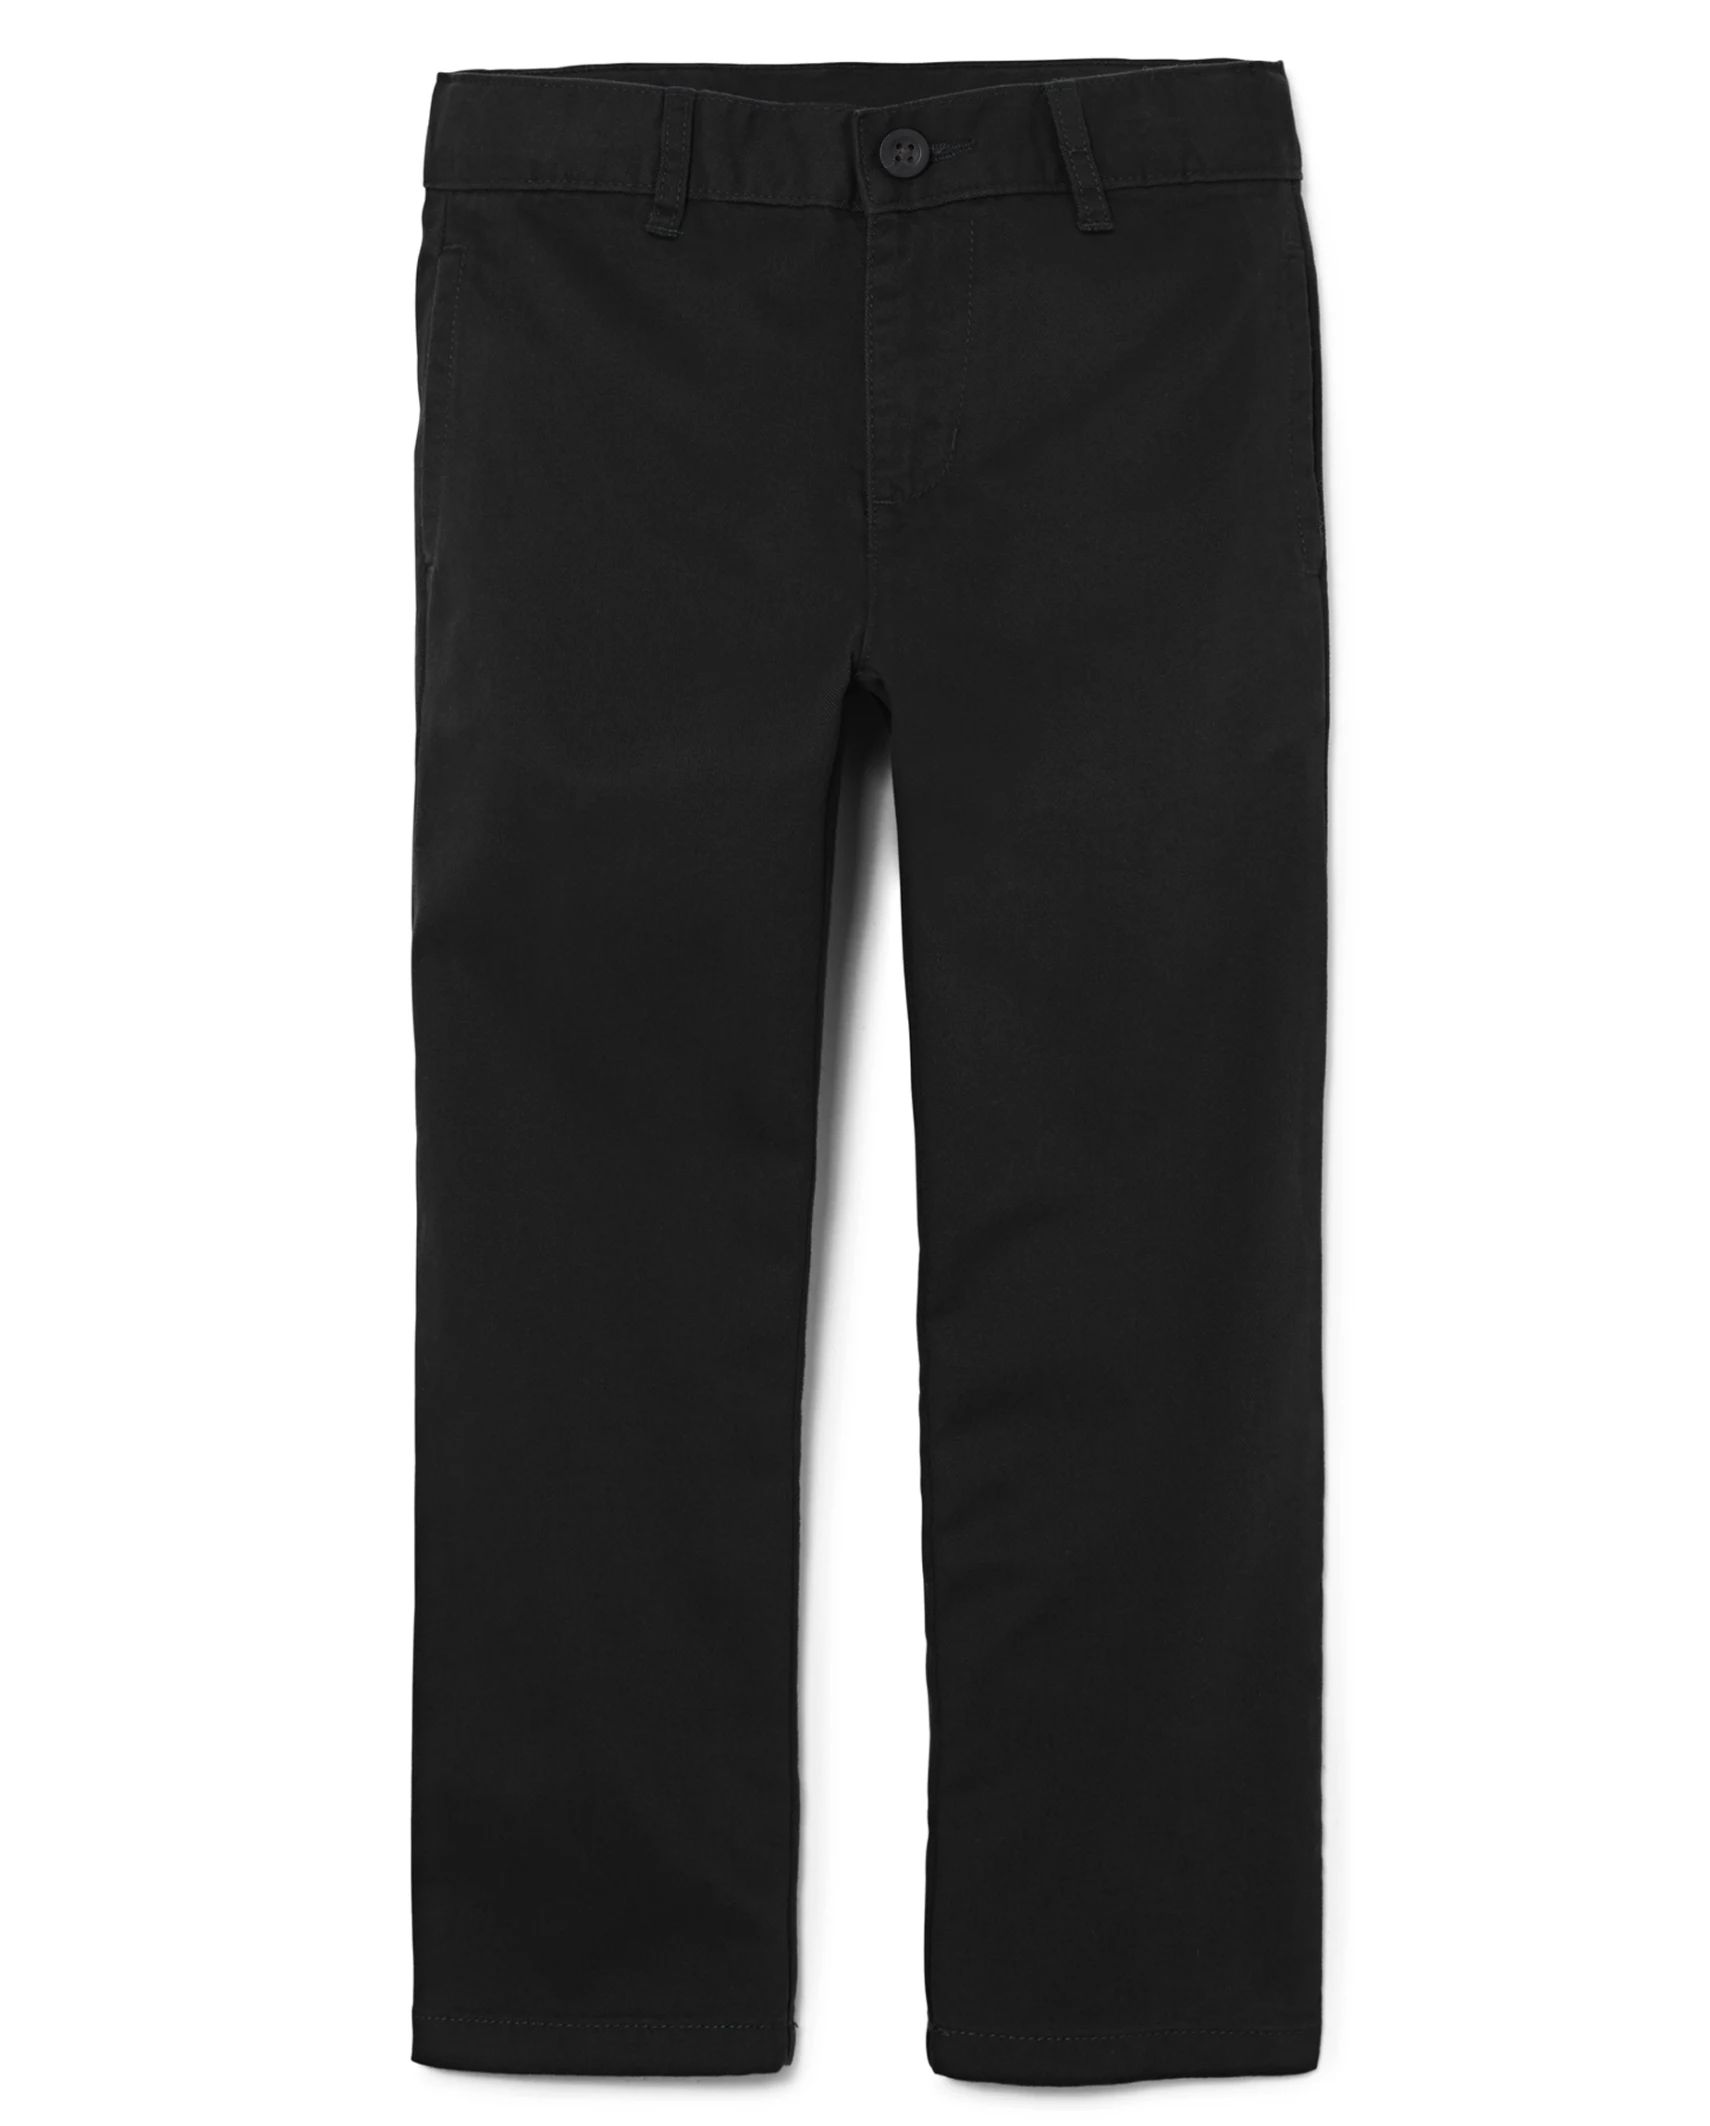 Boys Uniform Stretch Straight Chino Pants - black | The Children's Place